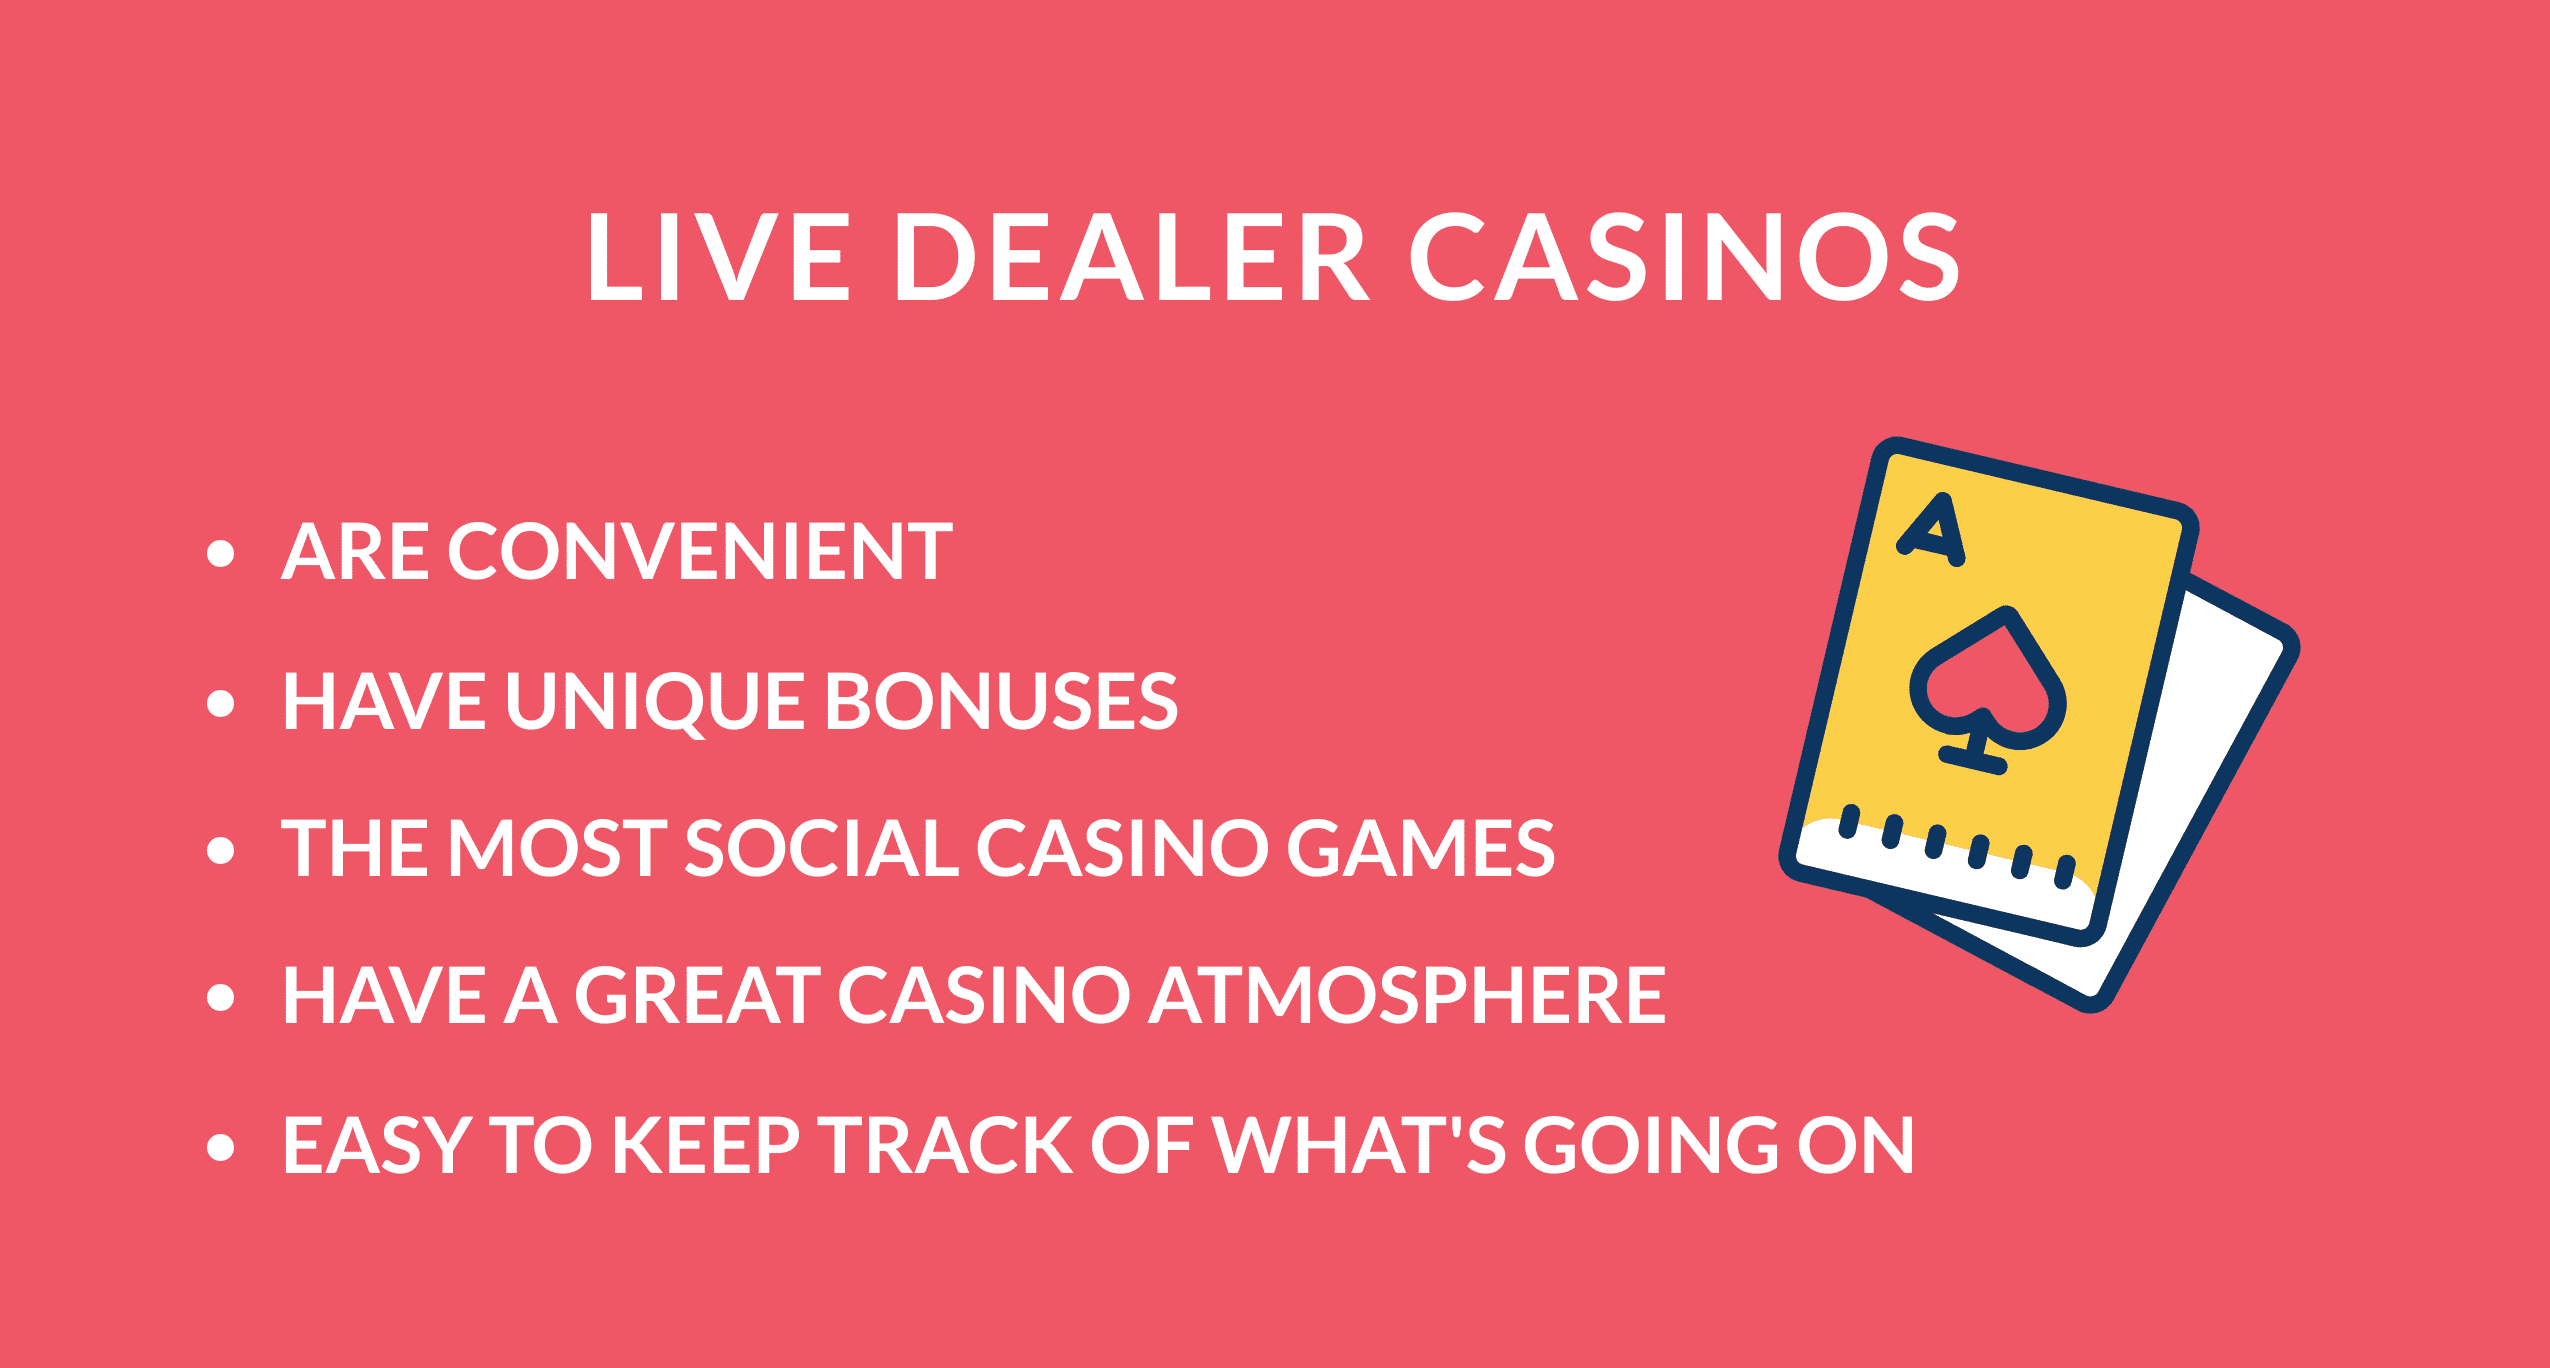 live dealer casinos usadvantages